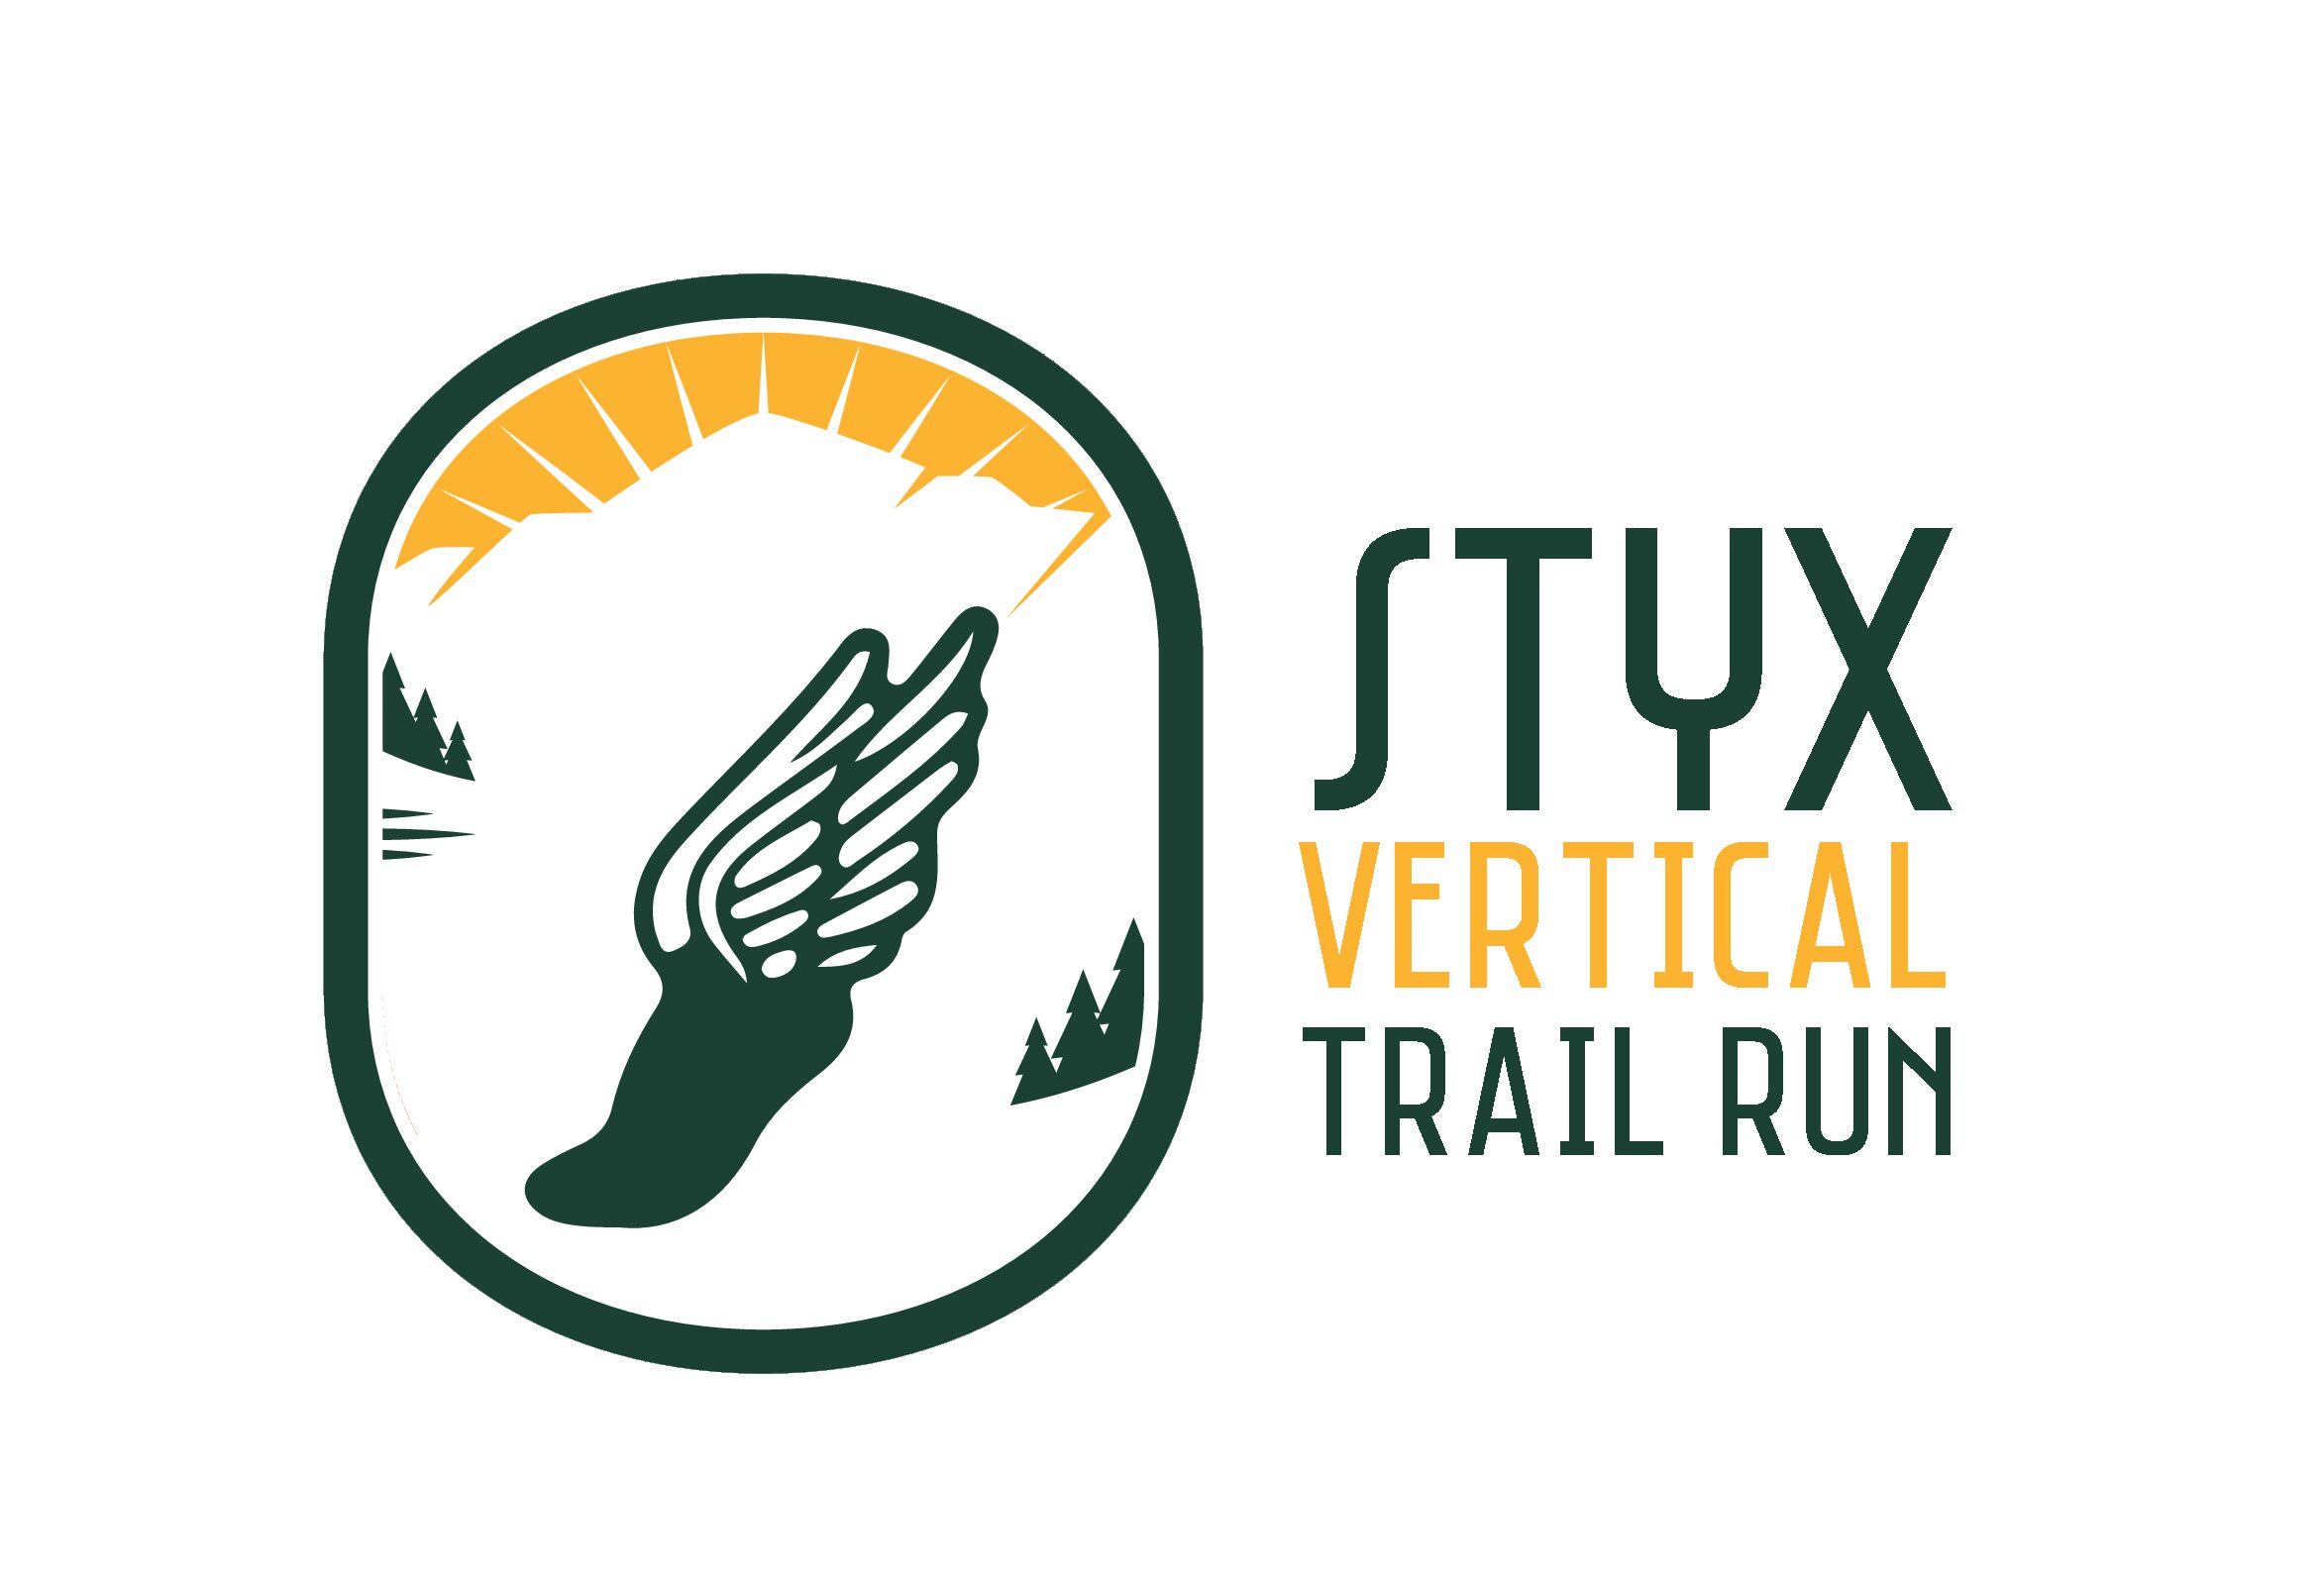 STYX Vertical Trail Run